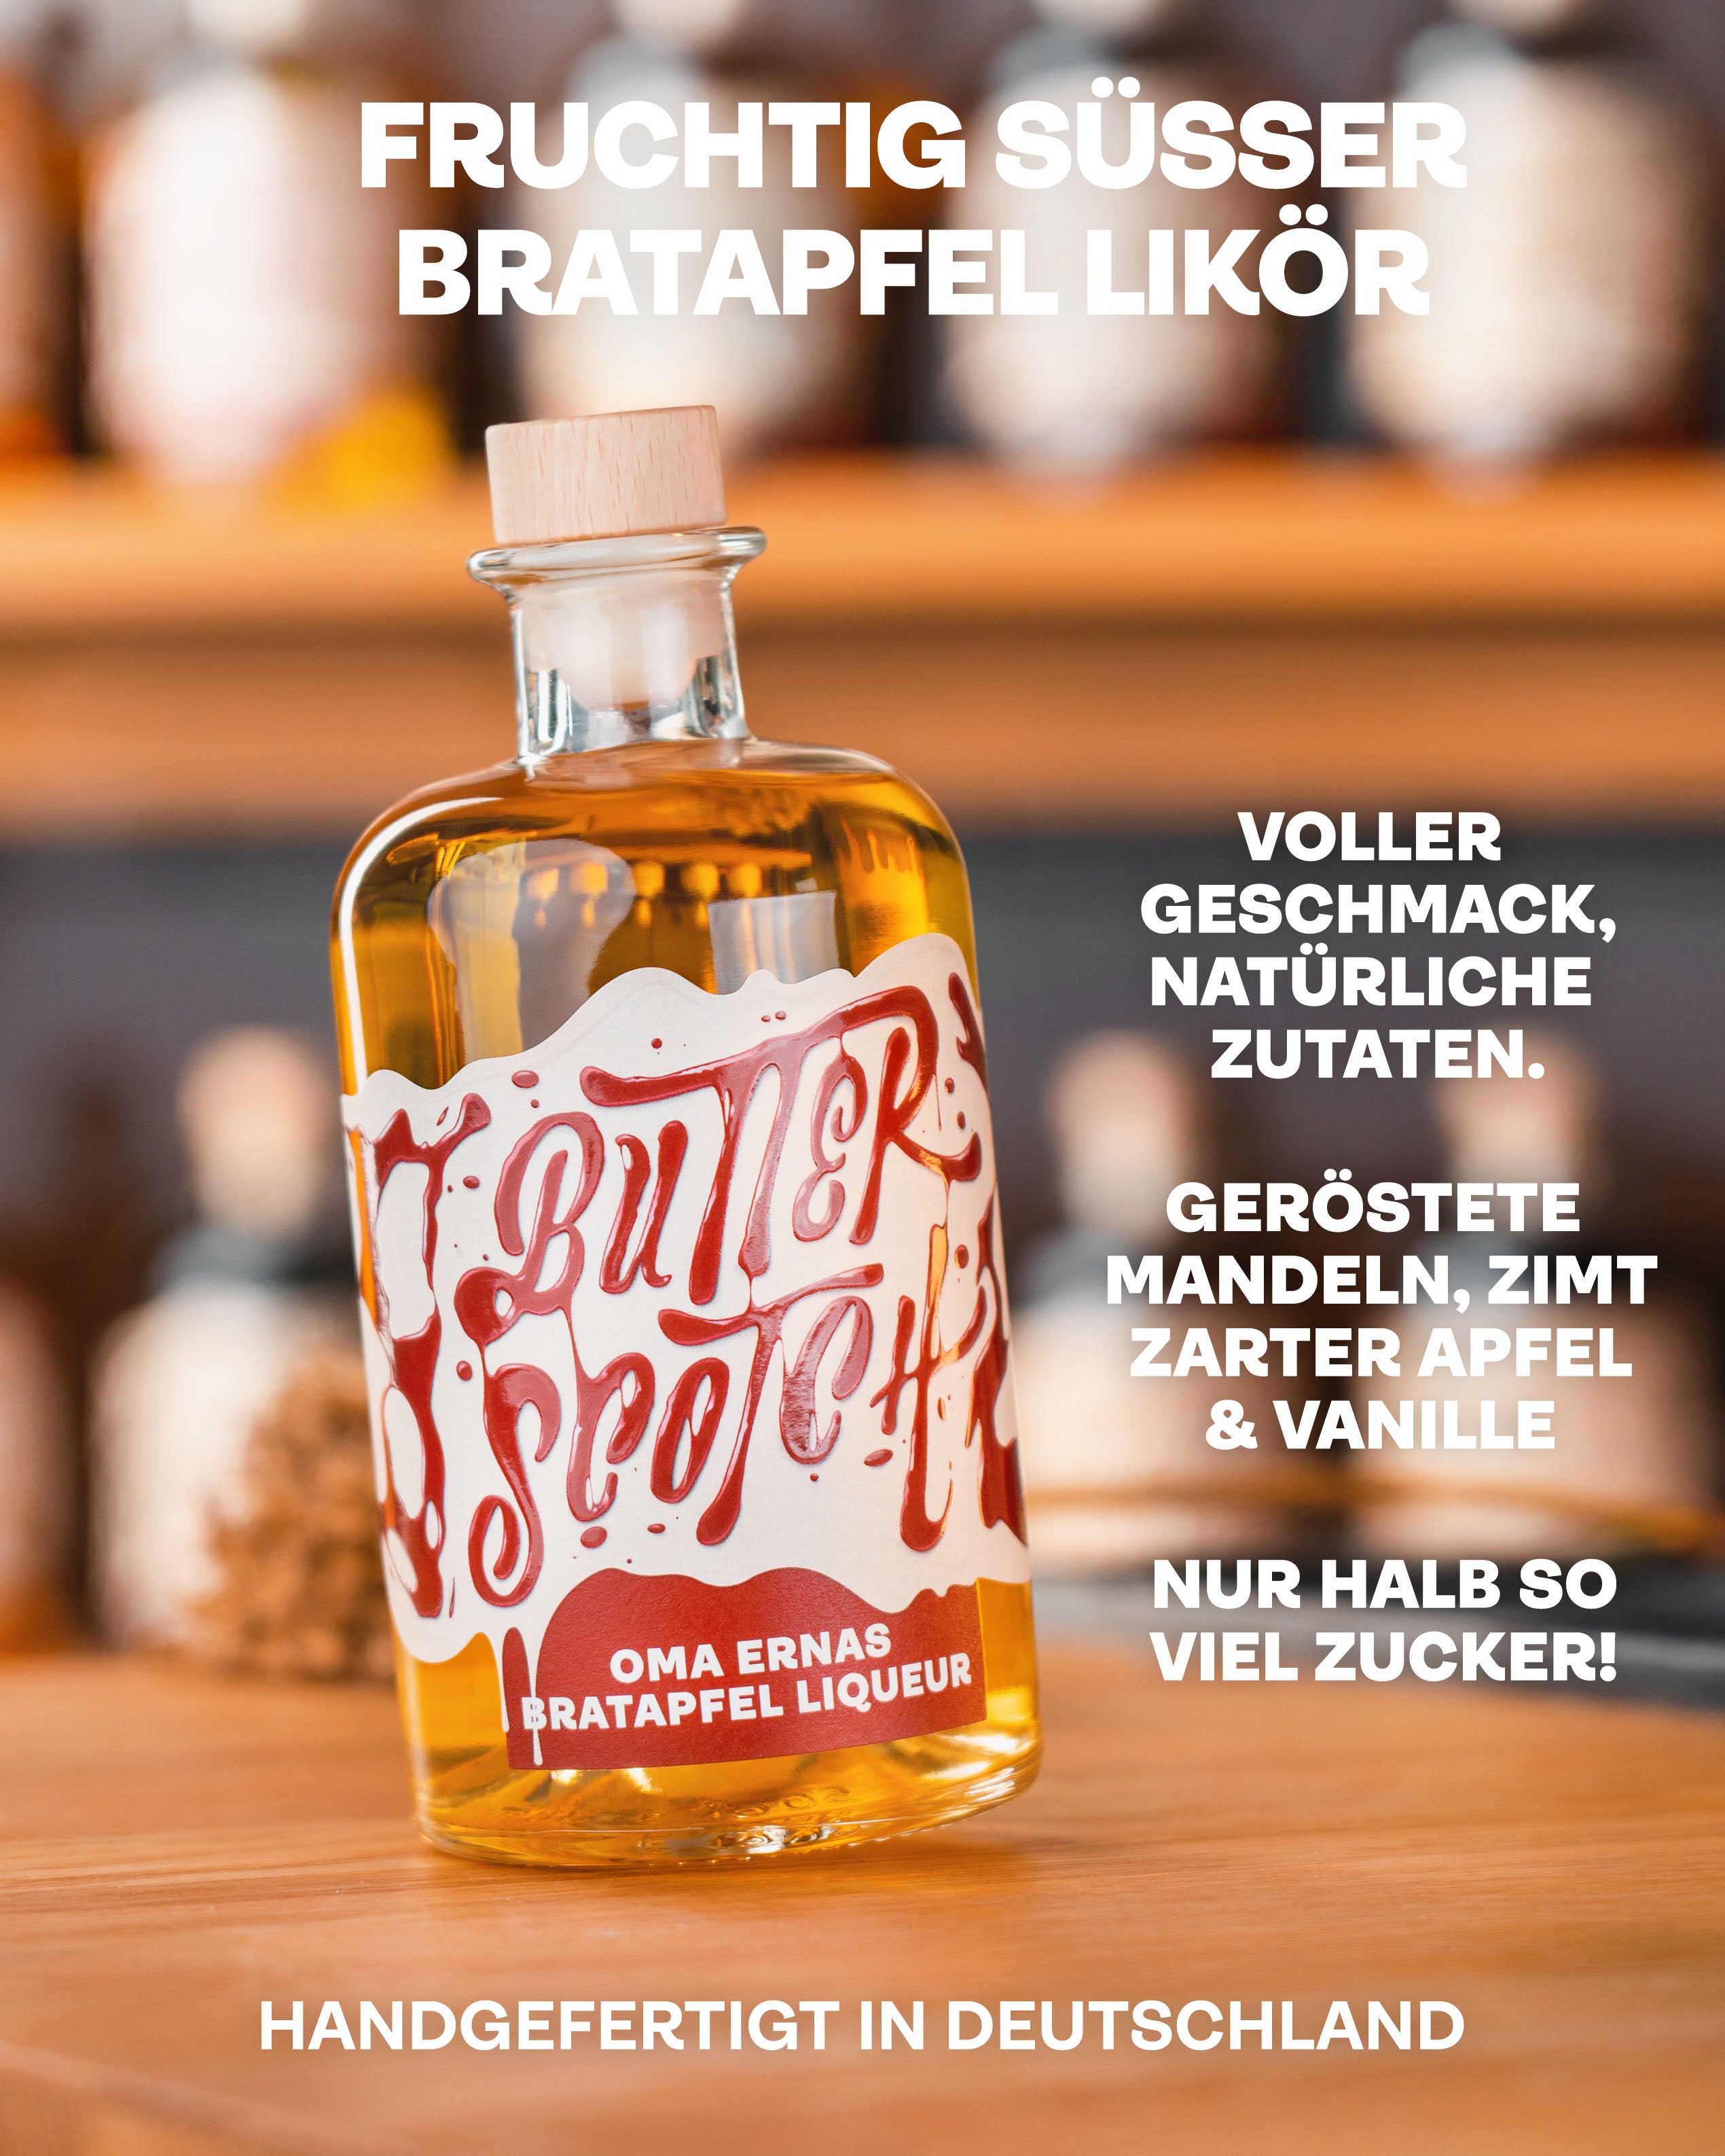 Oma Ernas Bratapfel Liqueur